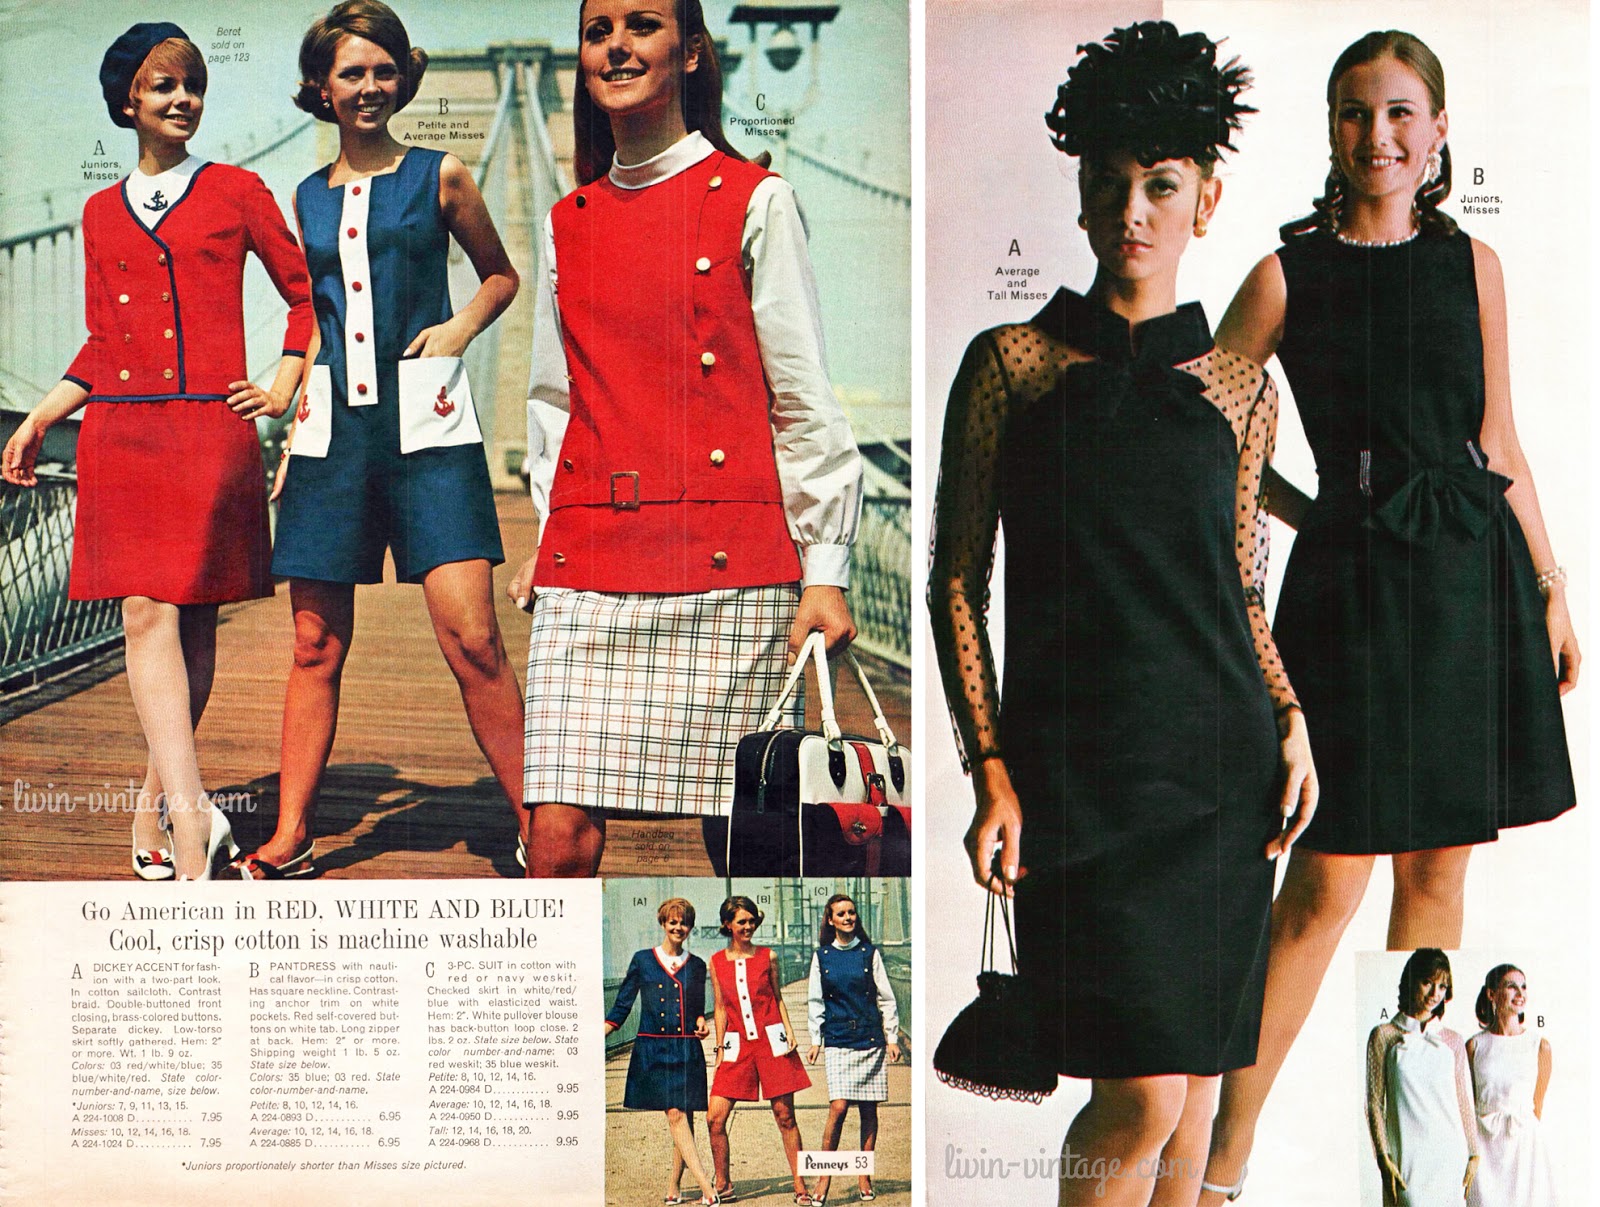 livin vintage 1969 Women's Fashion via JC Penny's Catalog